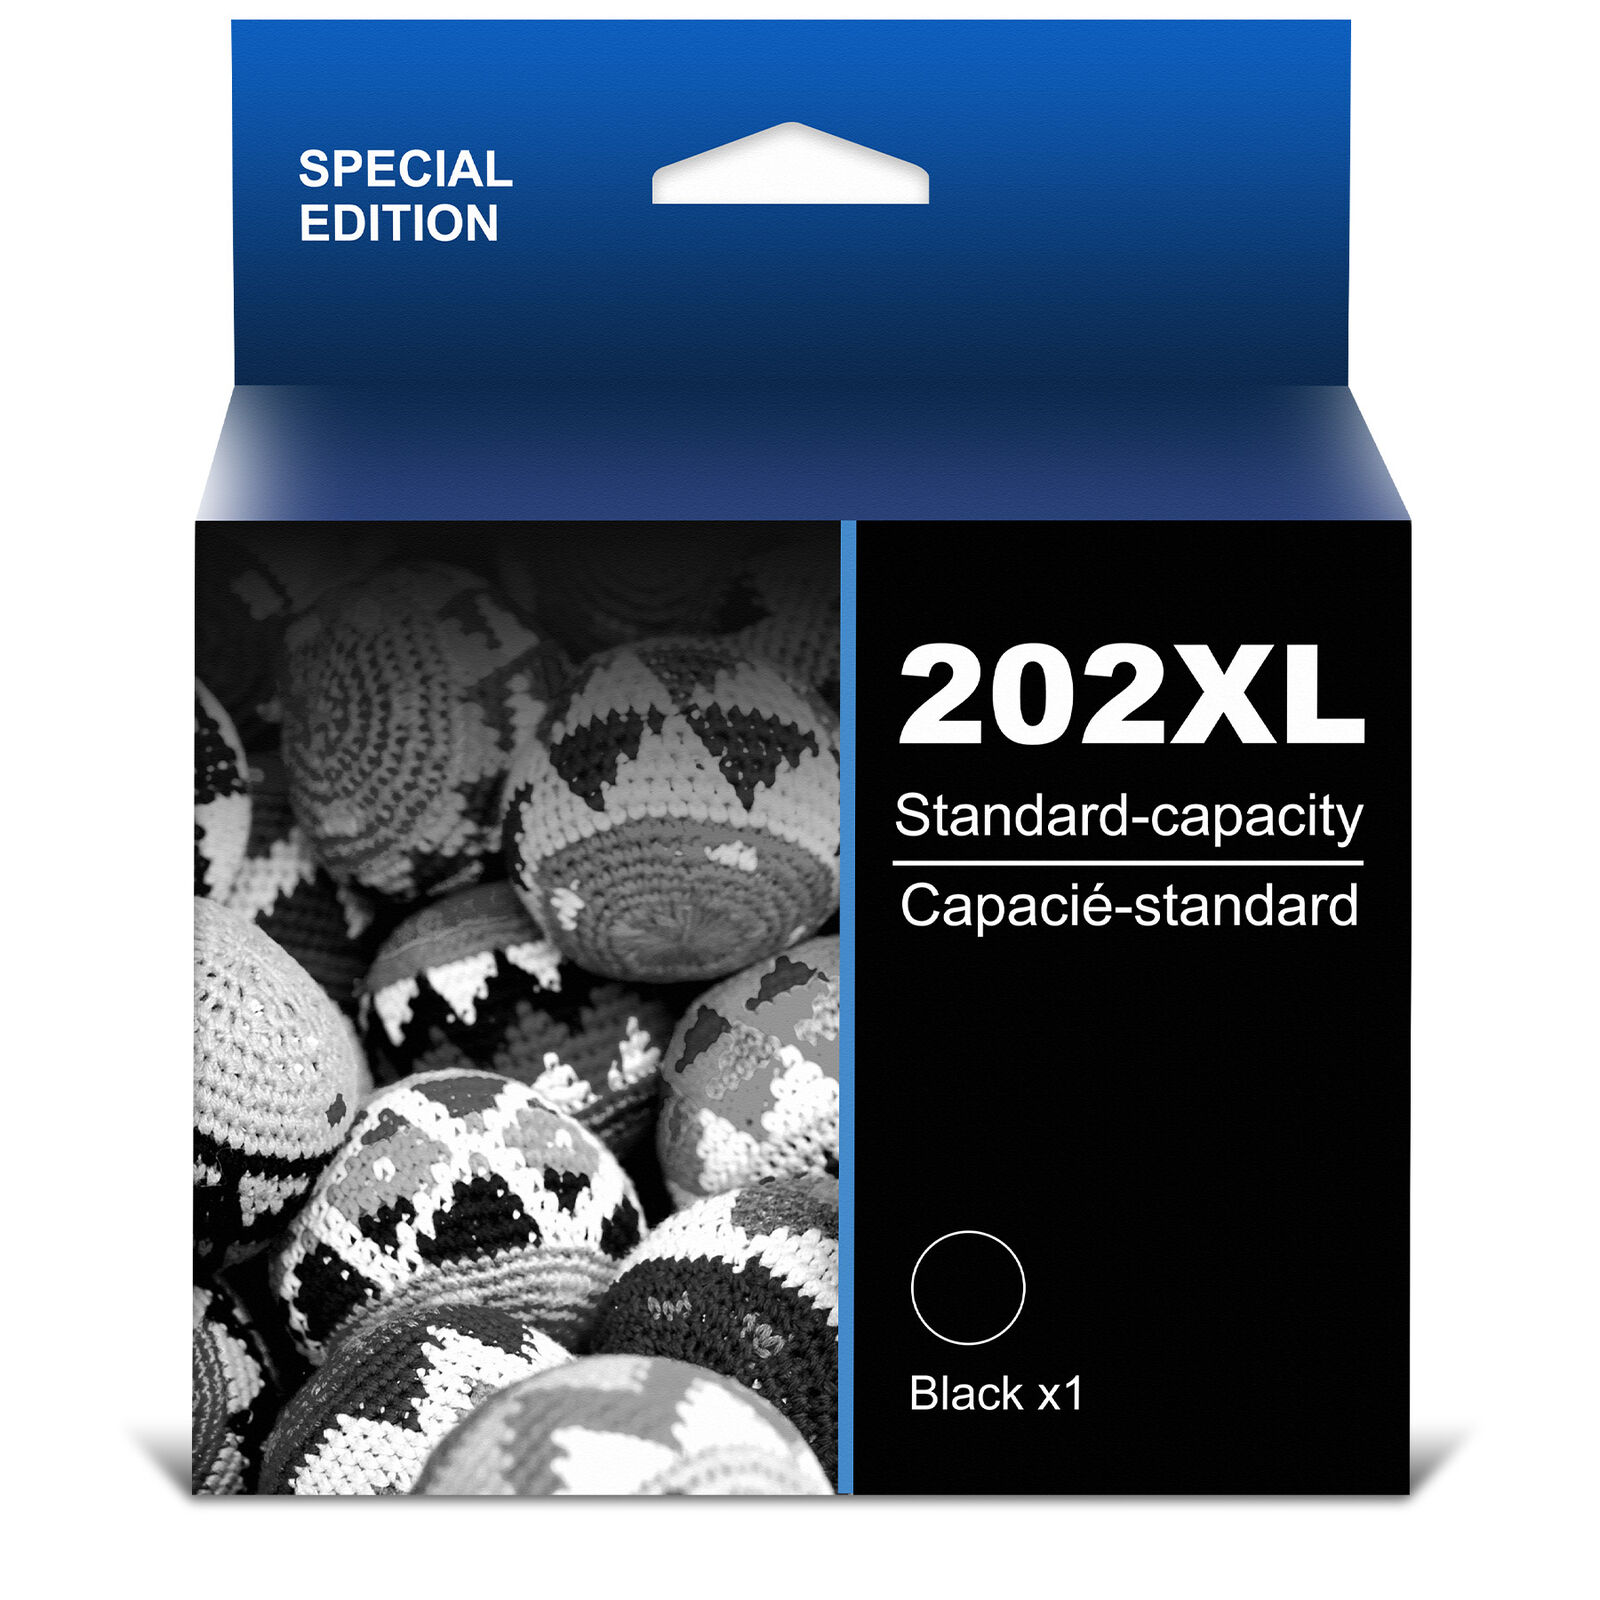 202XL T202XL 202 XL for Epson XP-5100 Printer Ink Cartridge for WF-2860 XP-5100